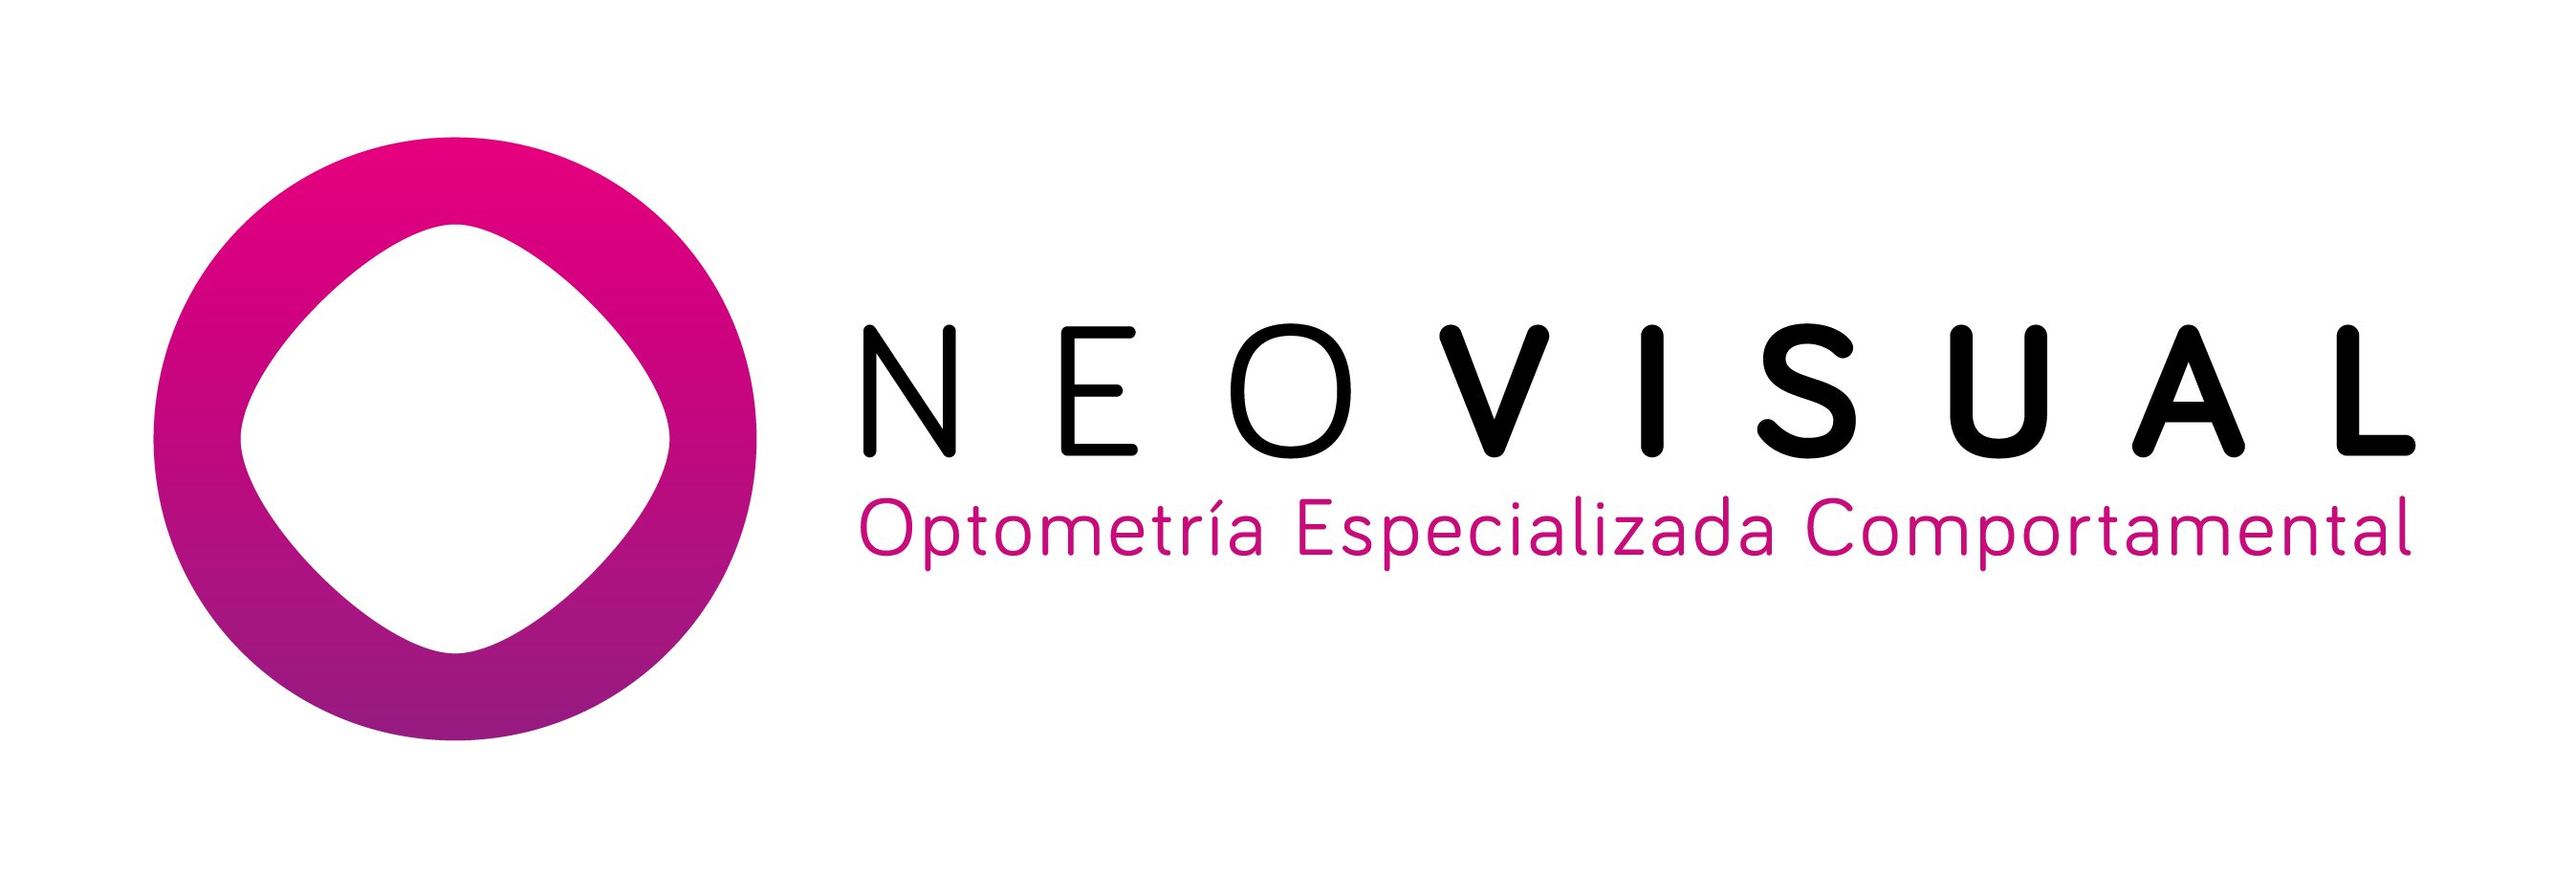 neovisual-logo-horizontal